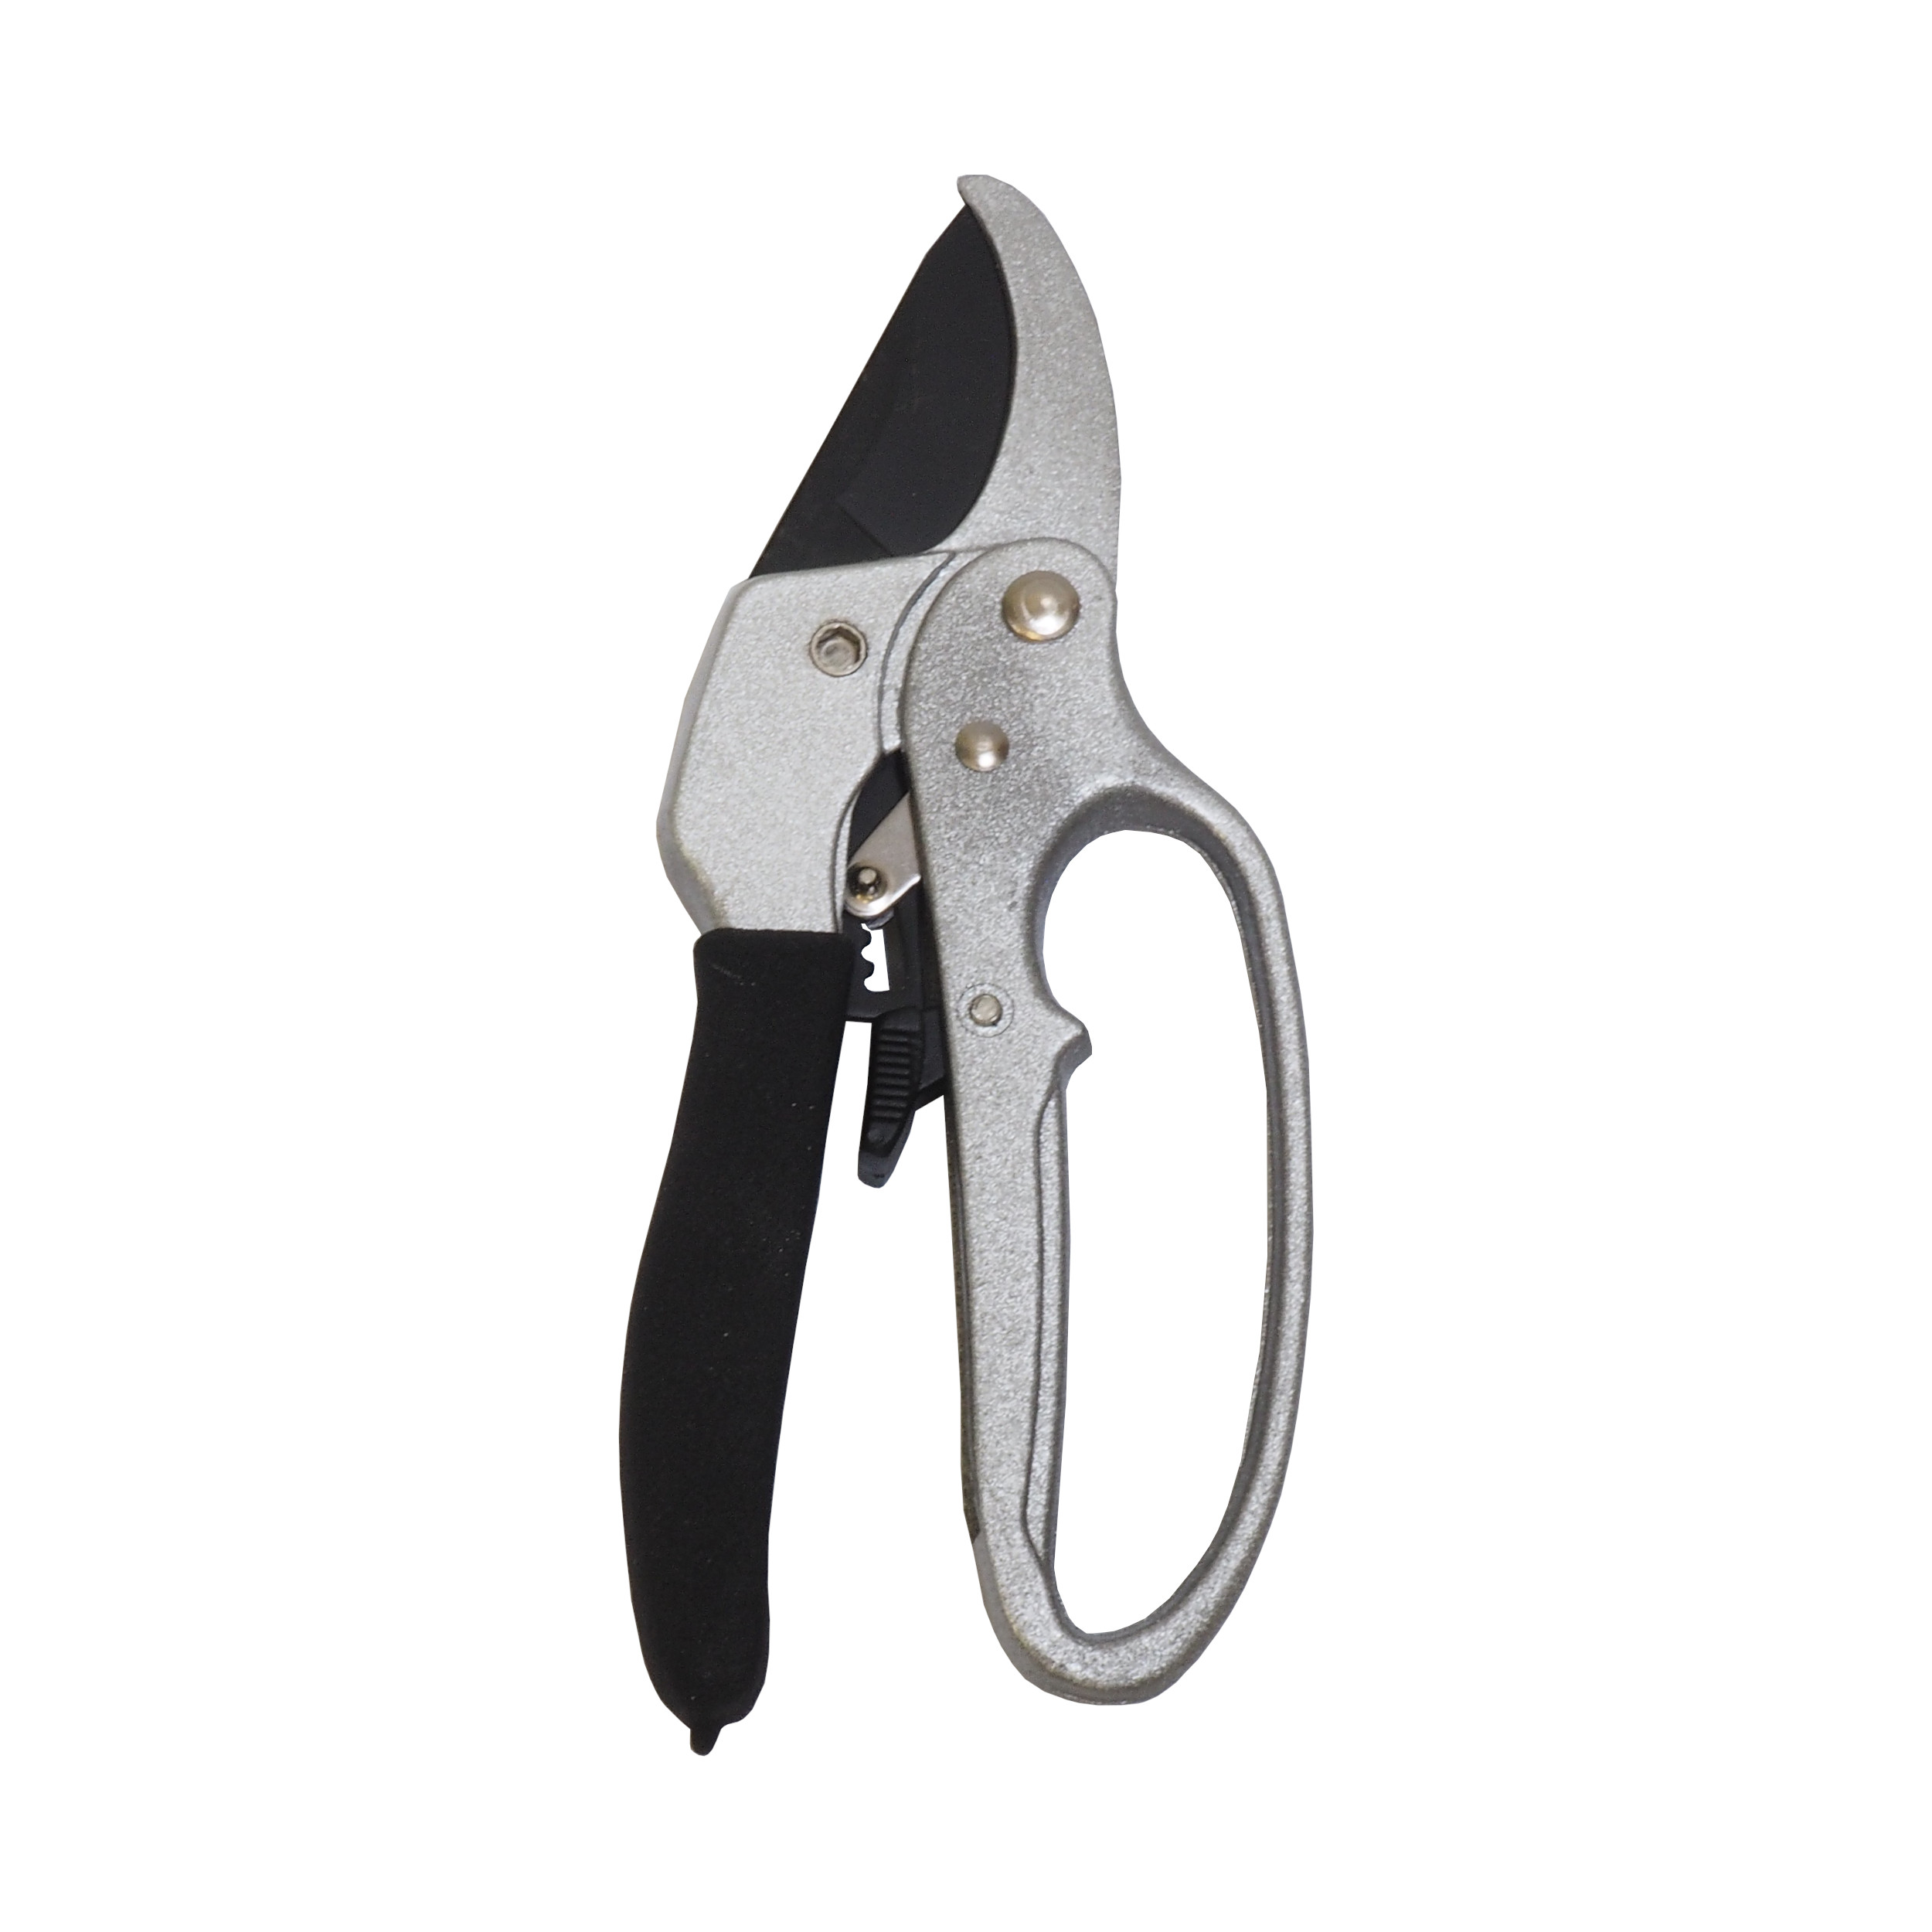 REFLEX nůžky zahradnické, hliníkové, ráčnové – krokovací, s chráničem prstů, 200 mm 0.25 Kg TOP Sklad4 307155 170